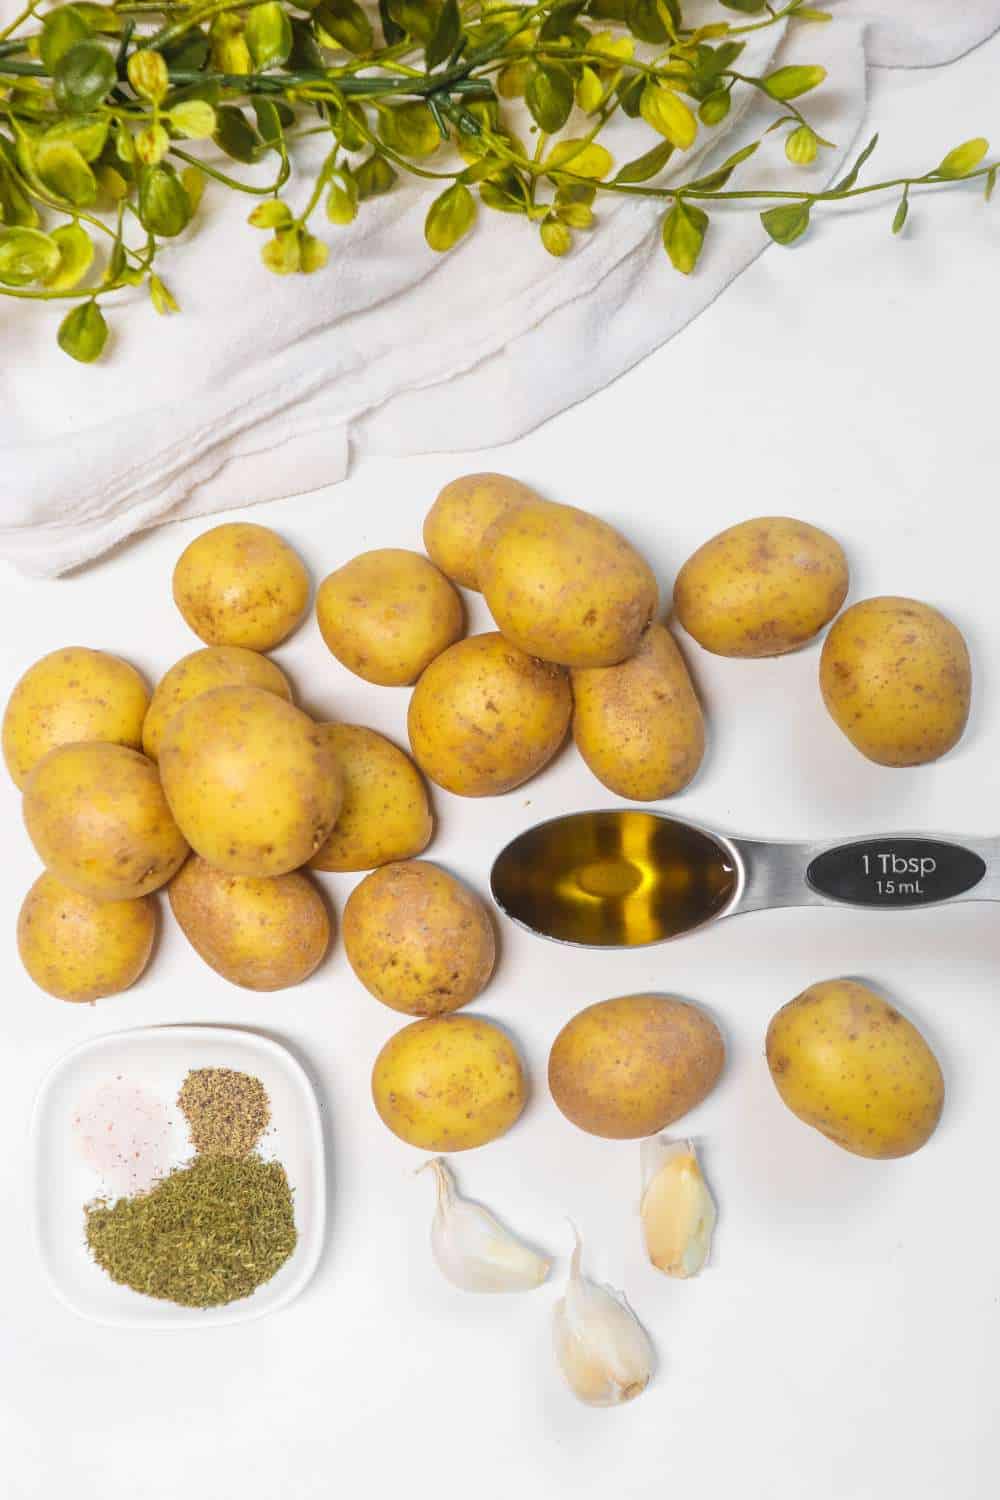 Dill & Garlic Roasted Potatoes ingredients